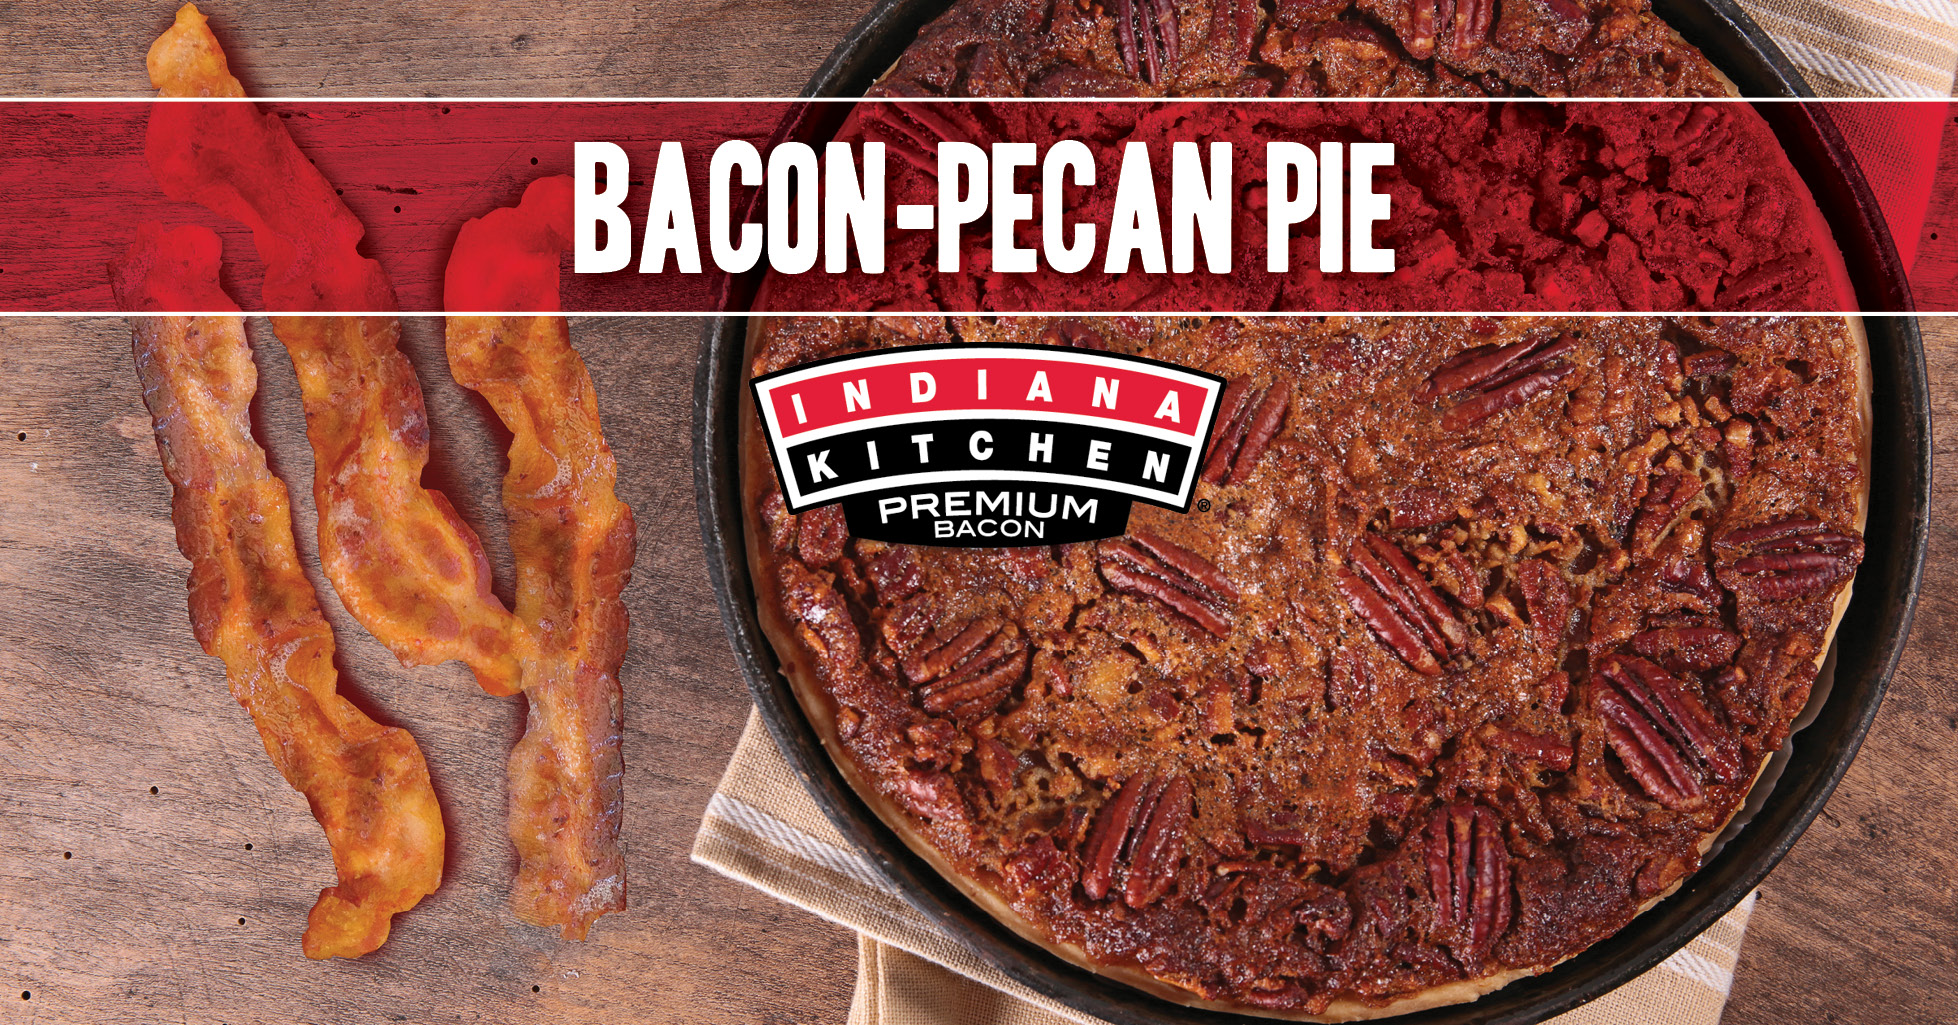 Indiana Kitchen Bacon-Pecan Pie